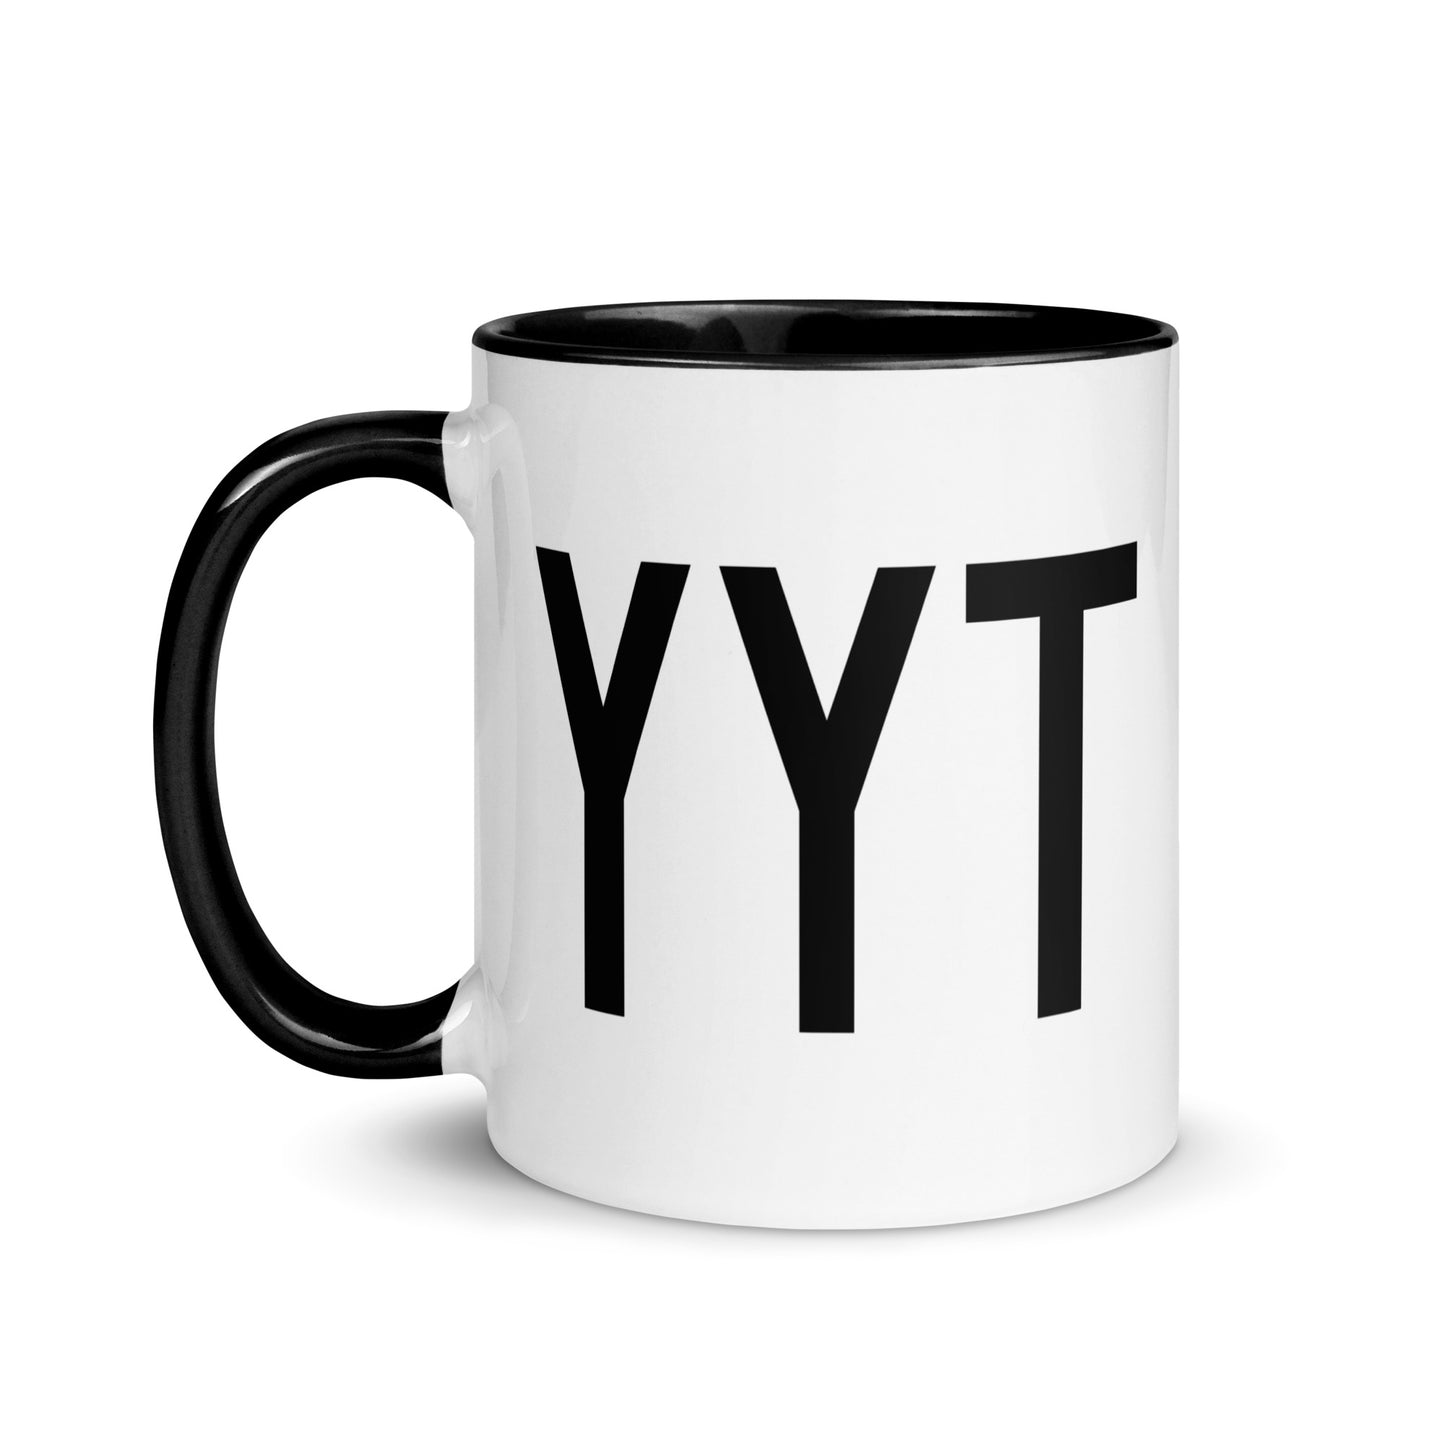 Aviation-Theme Coffee Mug - Black • YYT St. John's • YHM Designs - Image 03